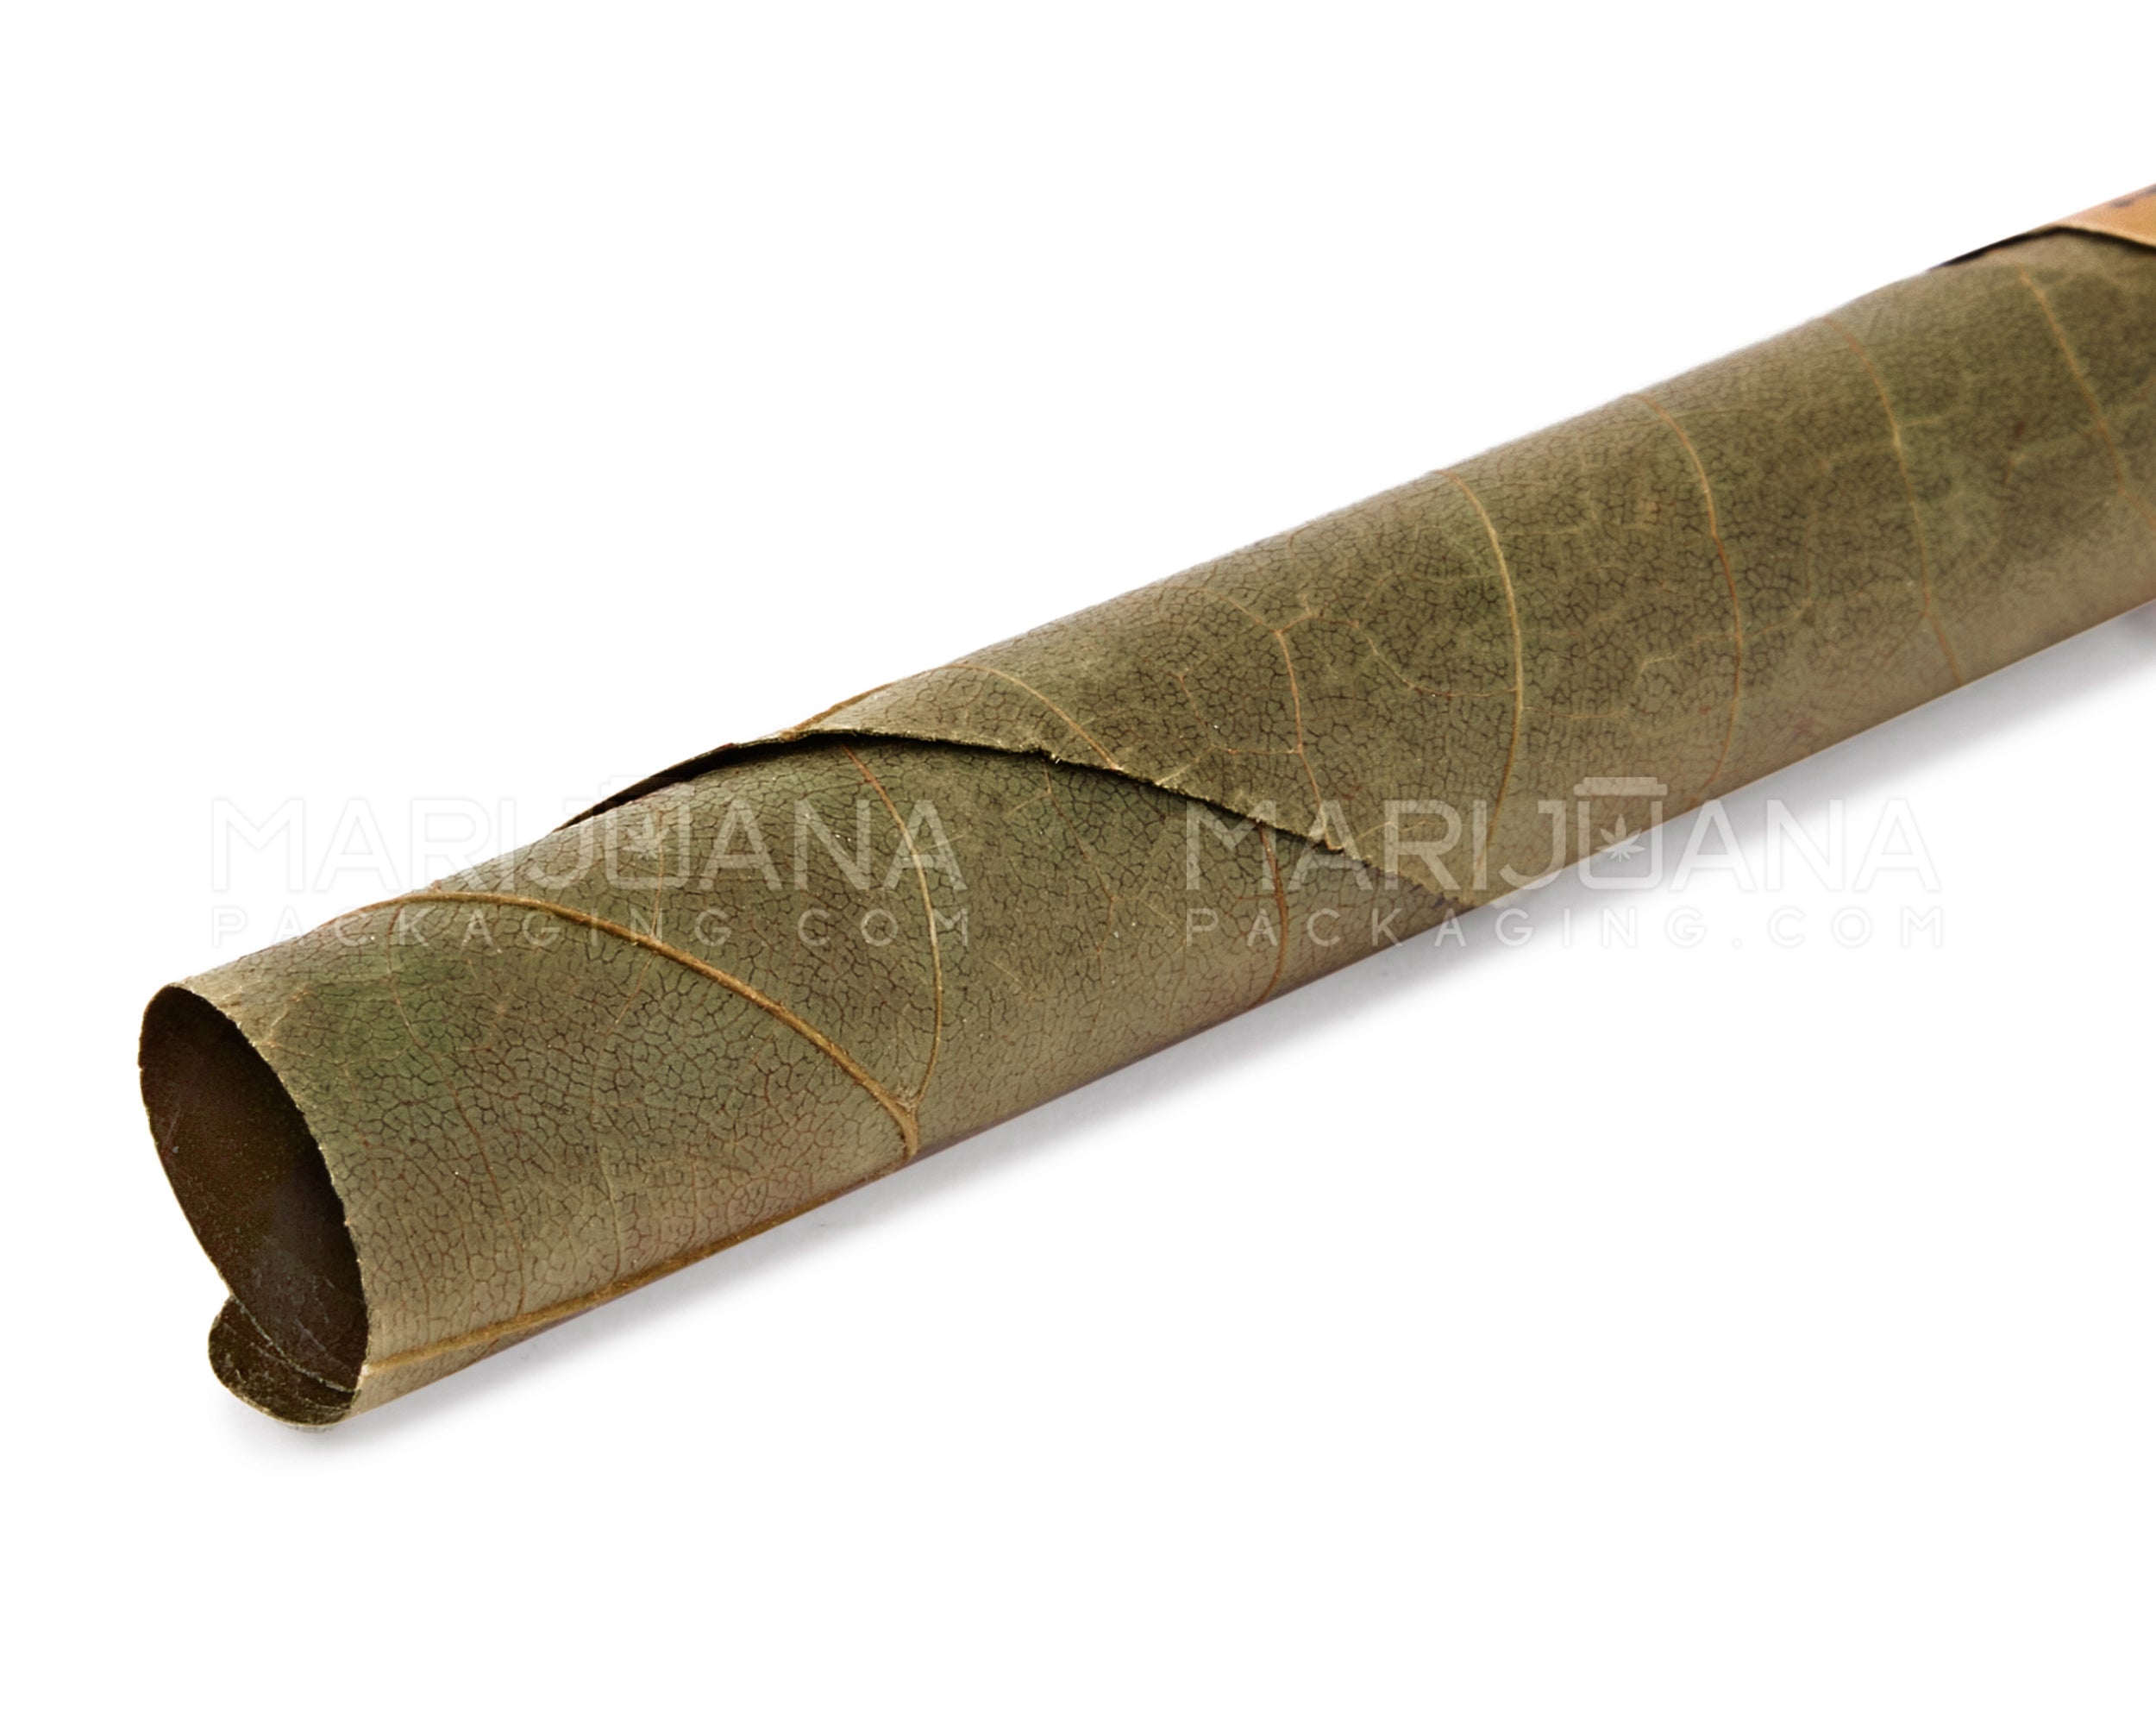 KING PALM | 'Retail Display' Slim Green Natural Leaf Blunt Wraps | 104mm - Margarita - 20 Count - 7